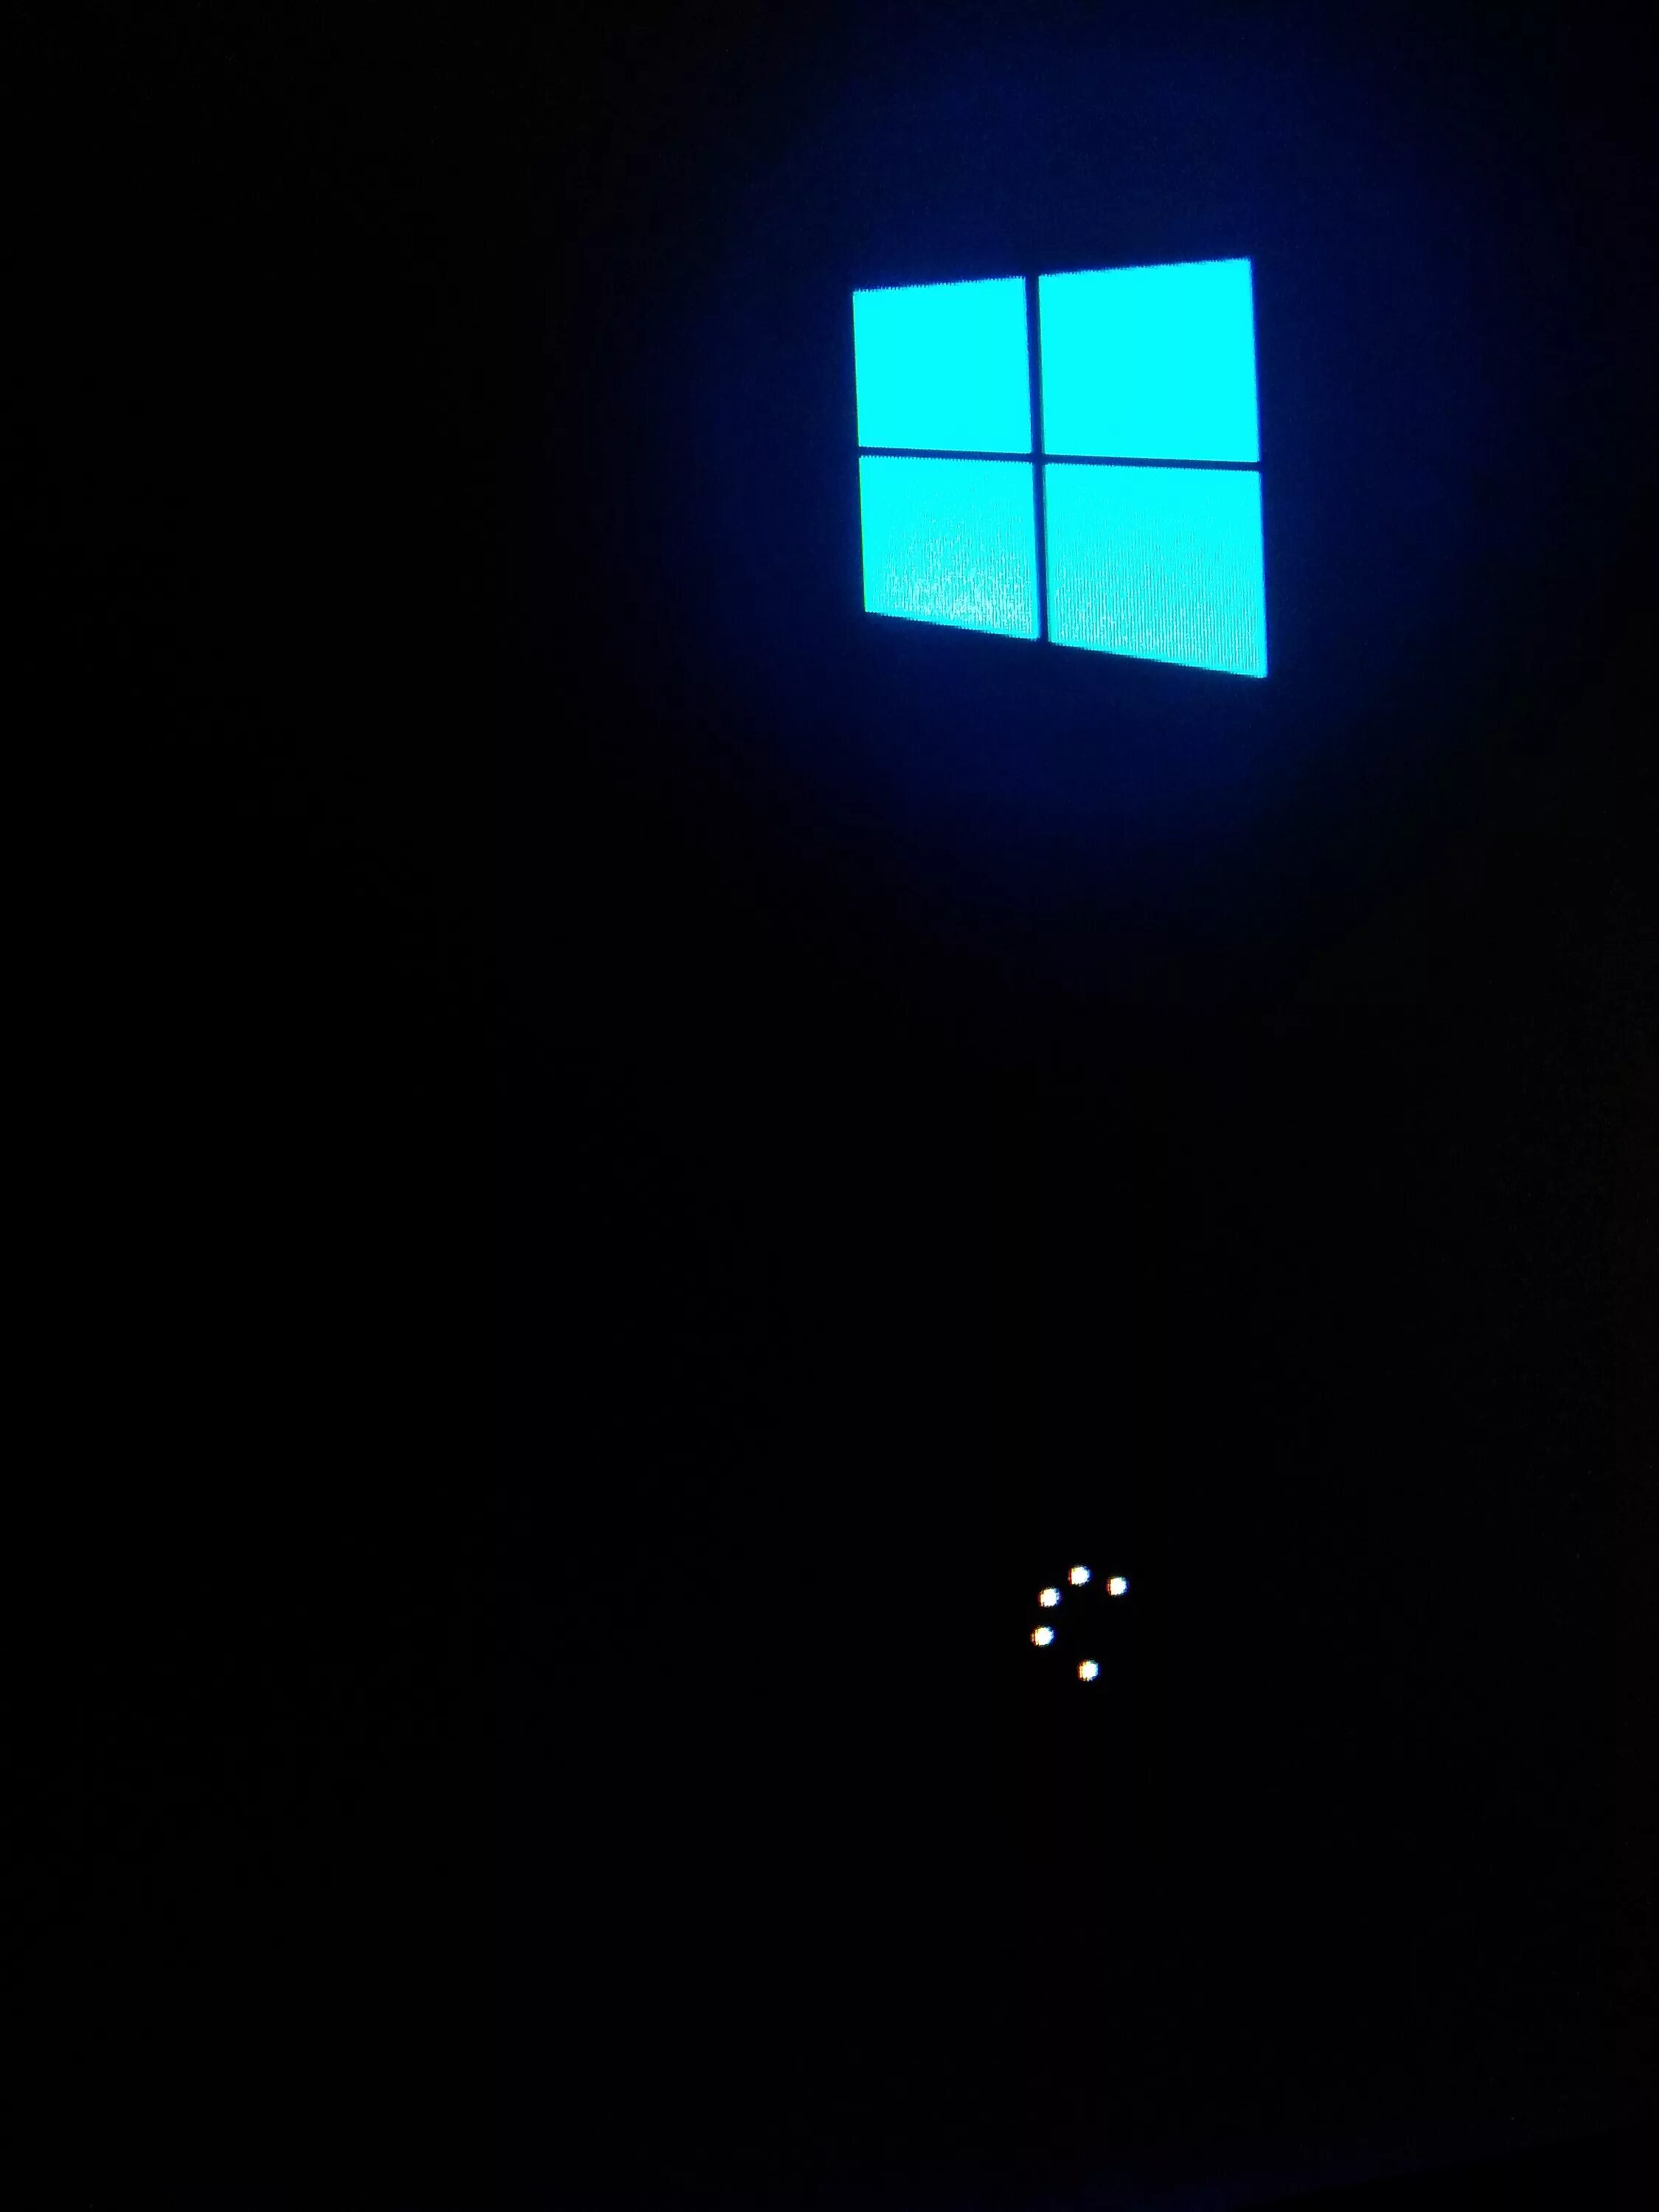 Load windows 10. Загрузочный экран виндовс 10. Экран загрузки виндовс 10. Загрузка виндовс 10. Черный экран Windows.